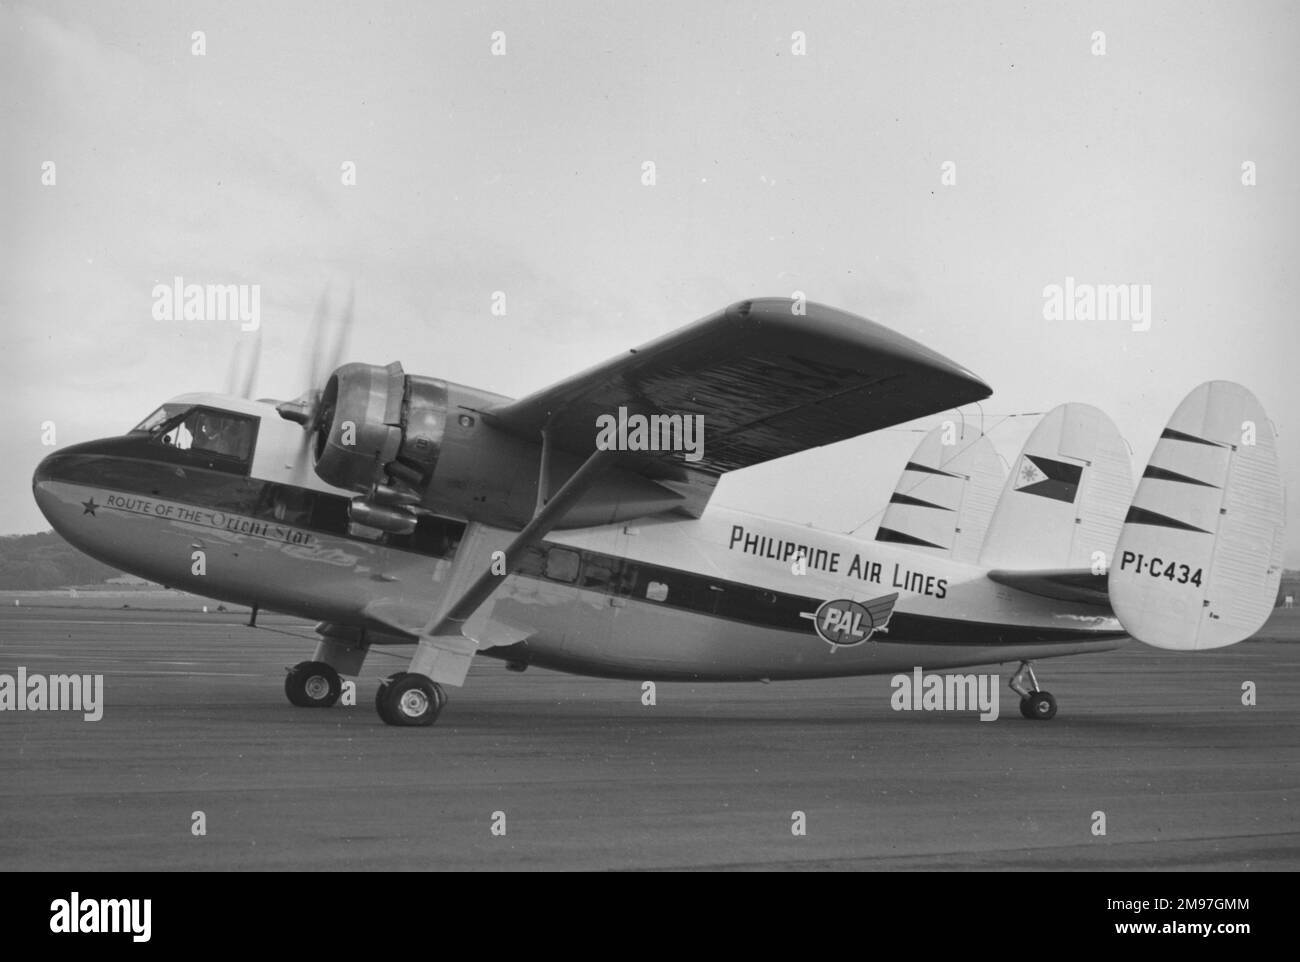 Scottish Aviation Twin Pioneer Srs 2 -Philippine Air Lines. Stock Photo